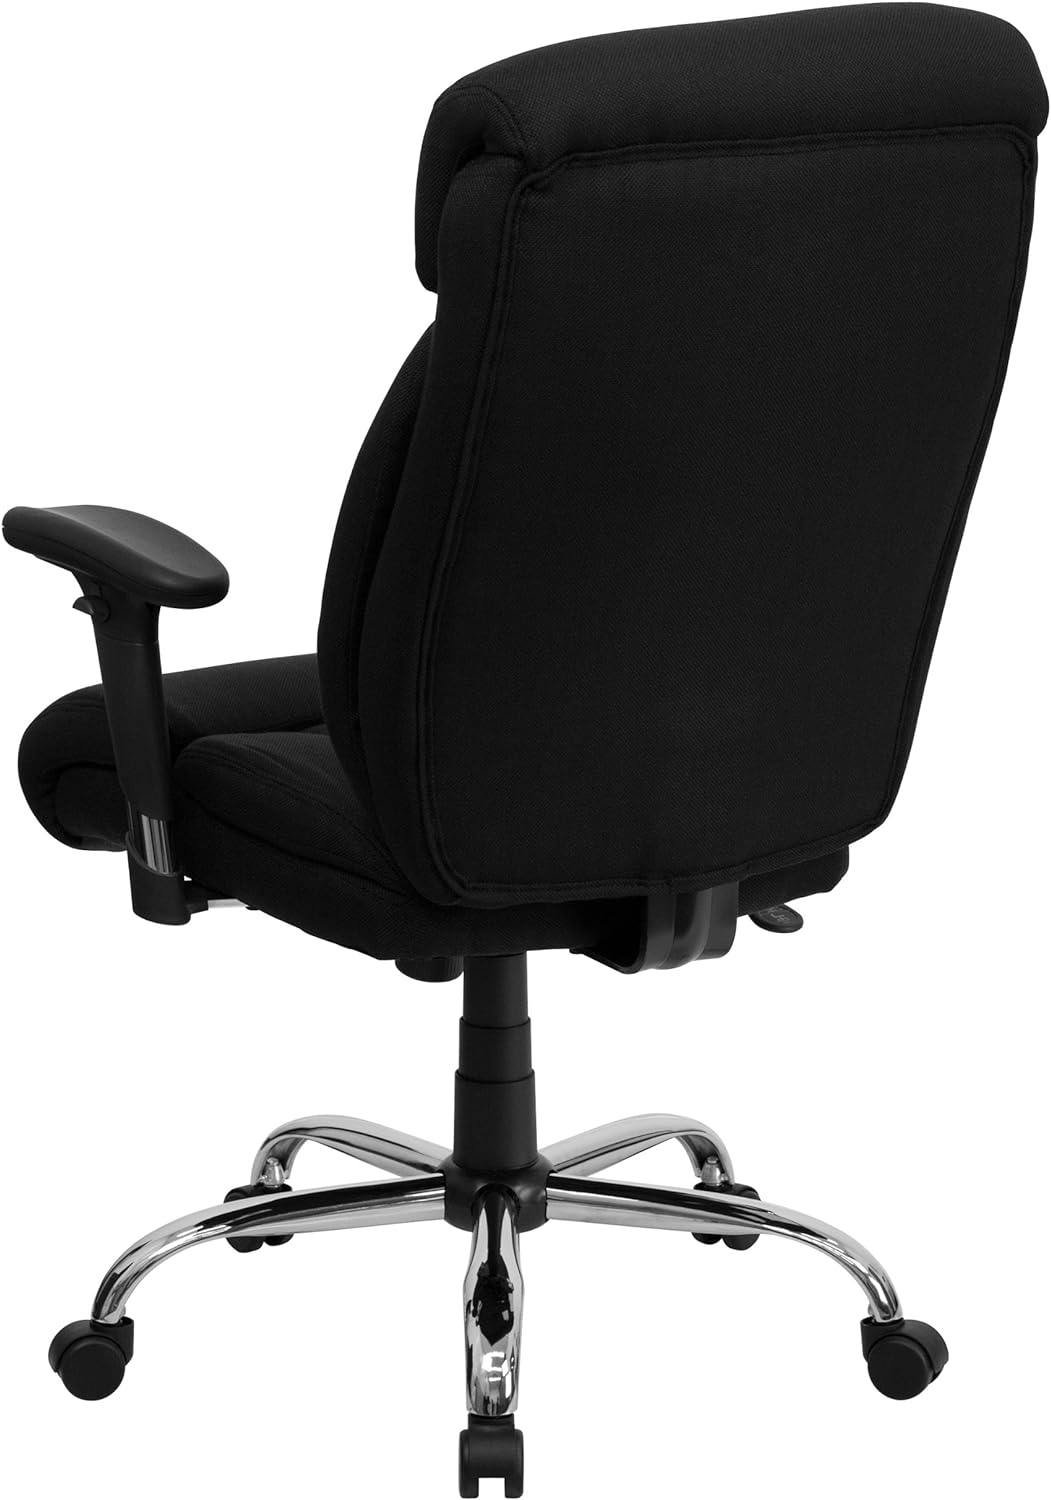 Ergonomic High-Back Executive Swivel Chair in Black with Chrome Base